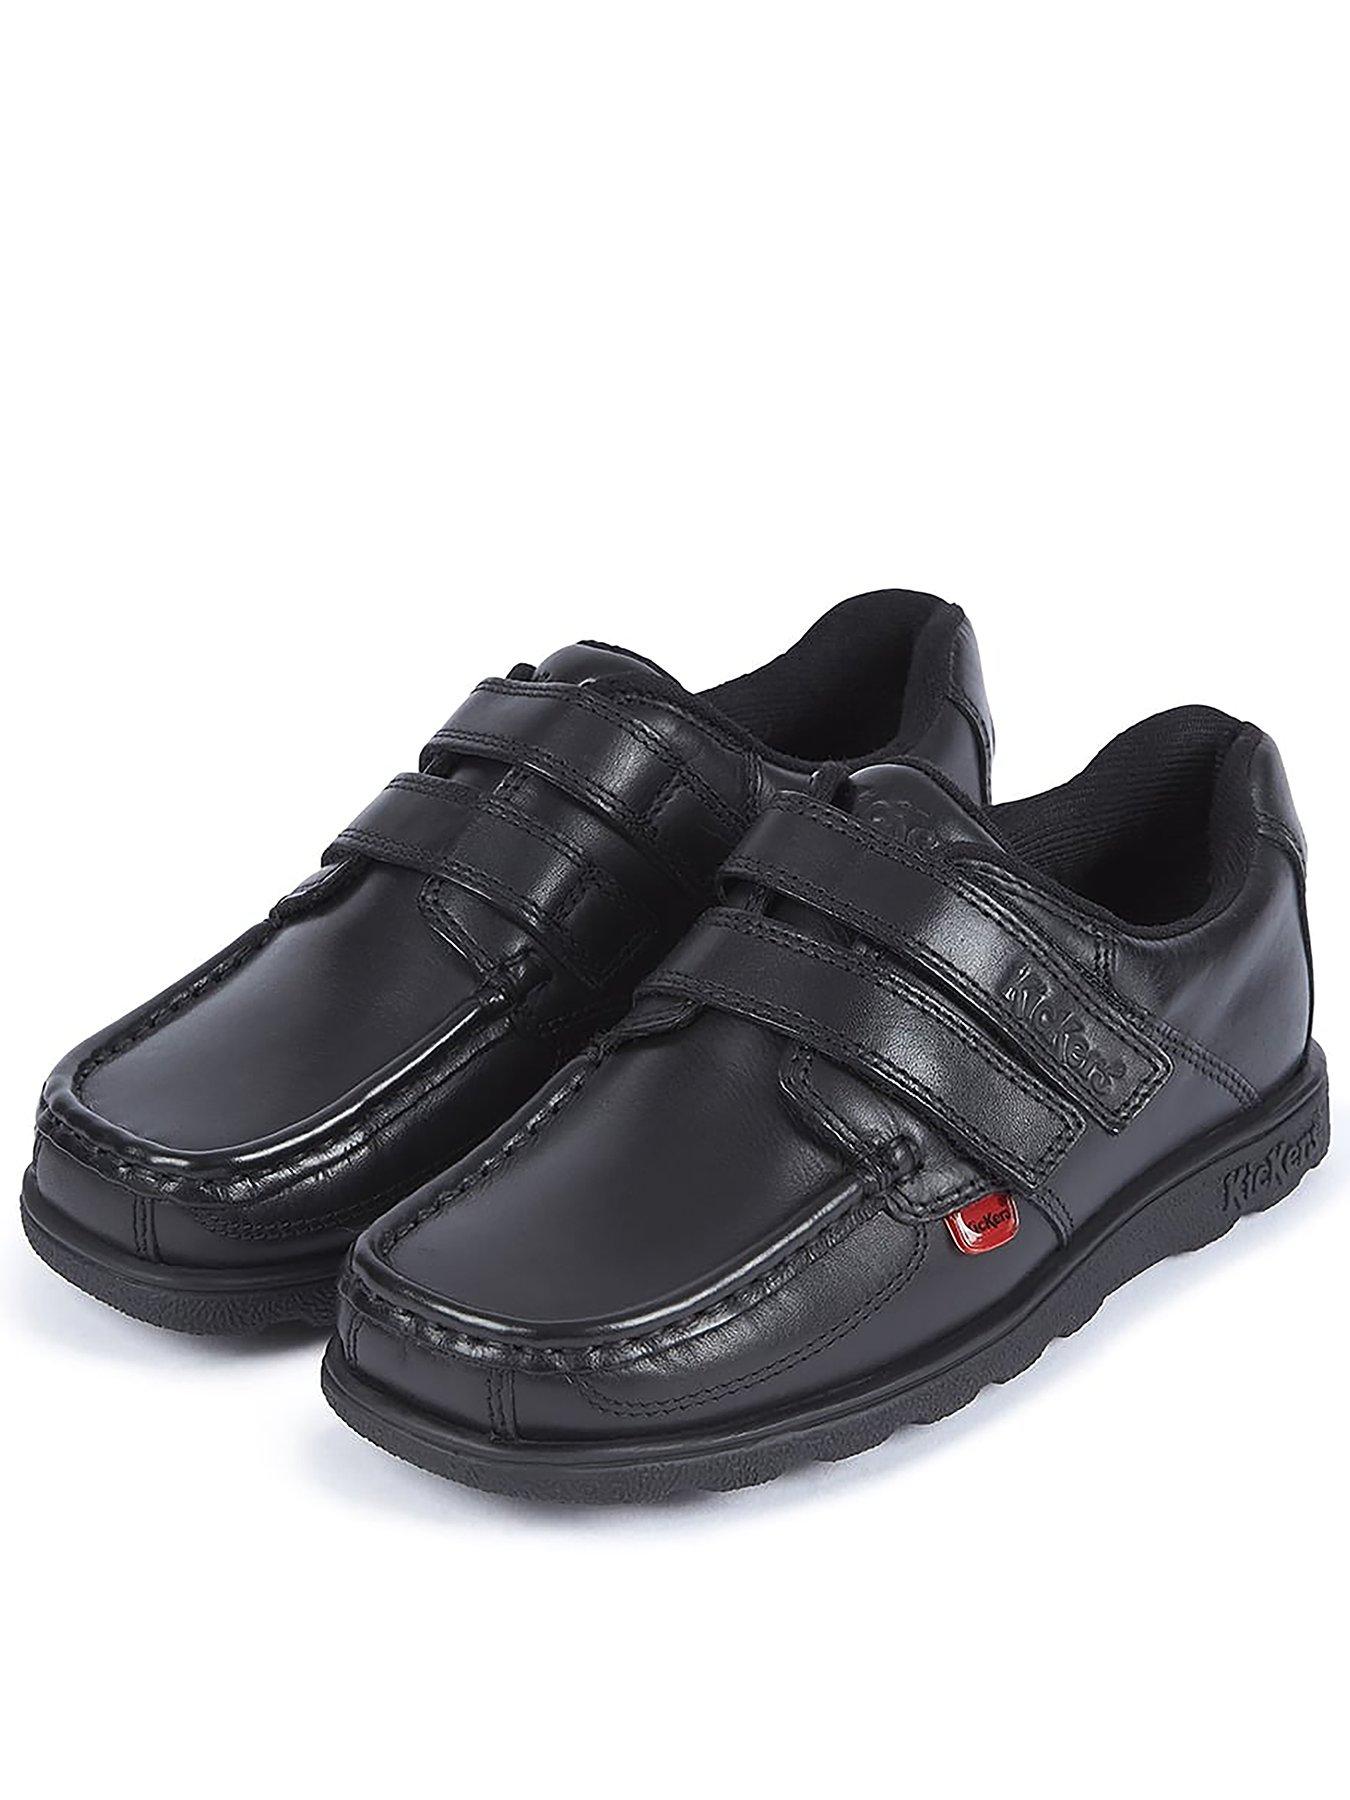 Boys School Shoes Leather Junior Kids Formal Dress Fasten Hook Loop ALL SIZE 904 